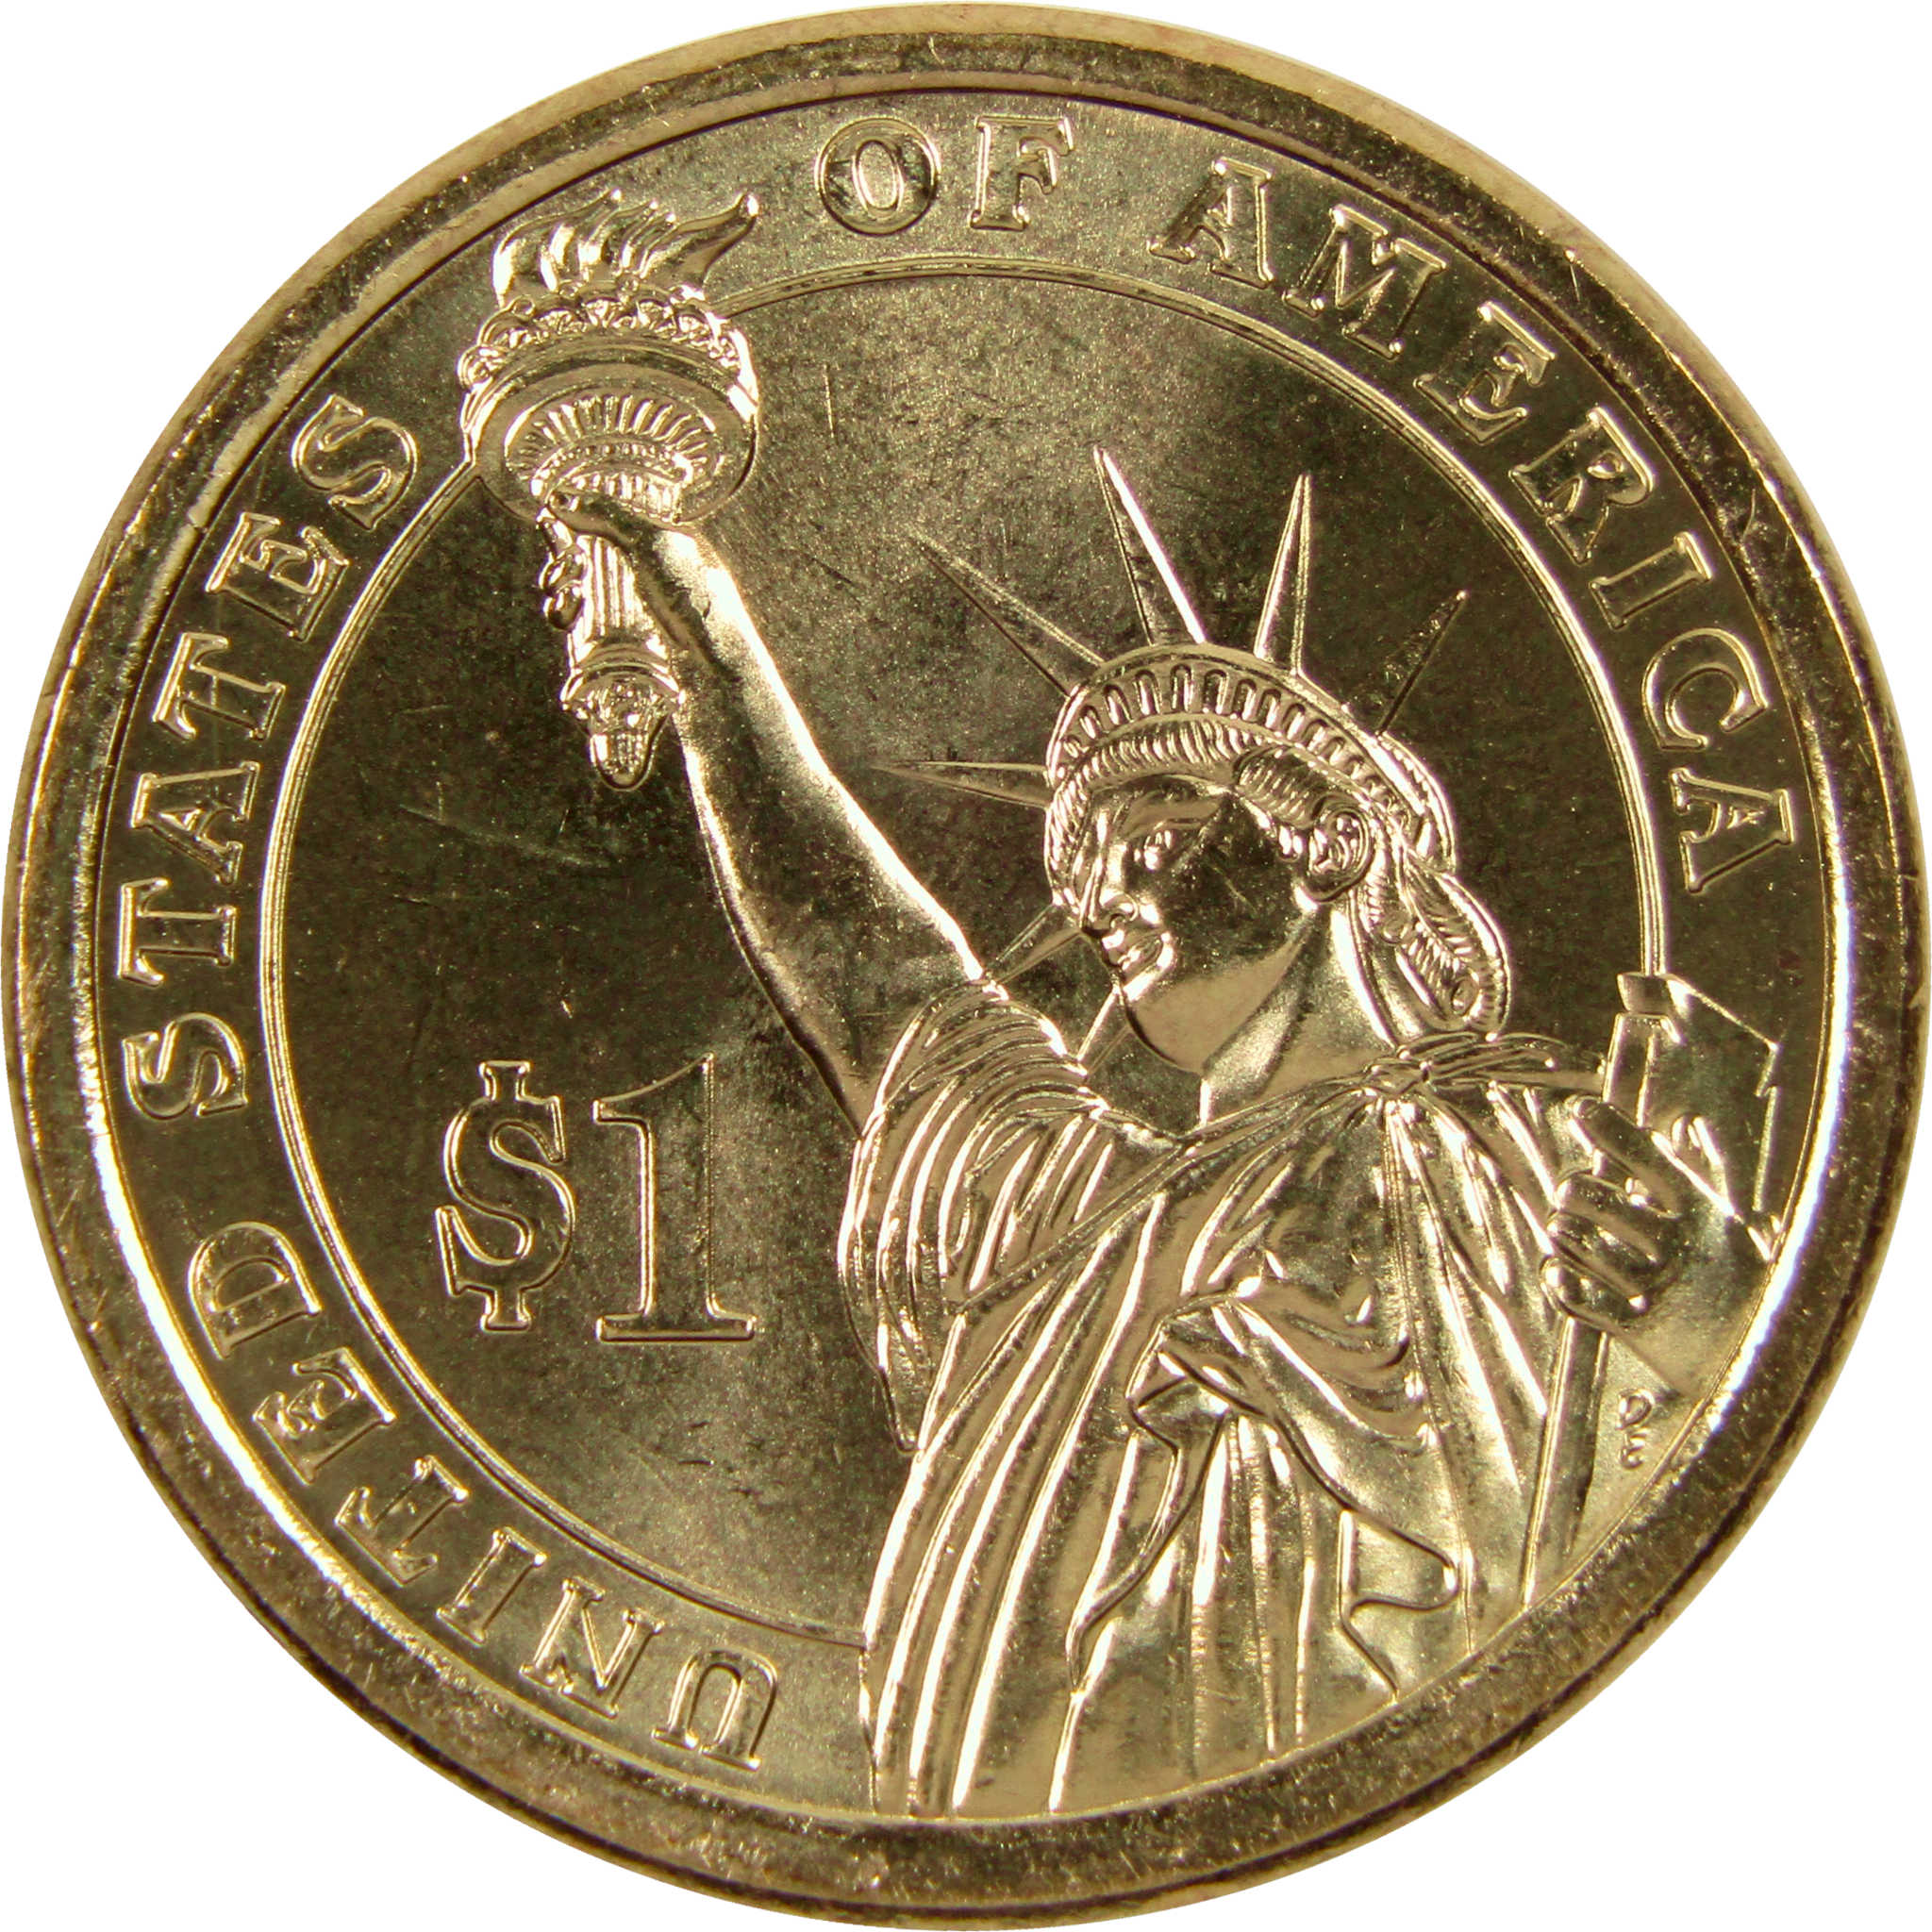 2007 P James Madison Presidential Dollar BU Uncirculated $1 Coin